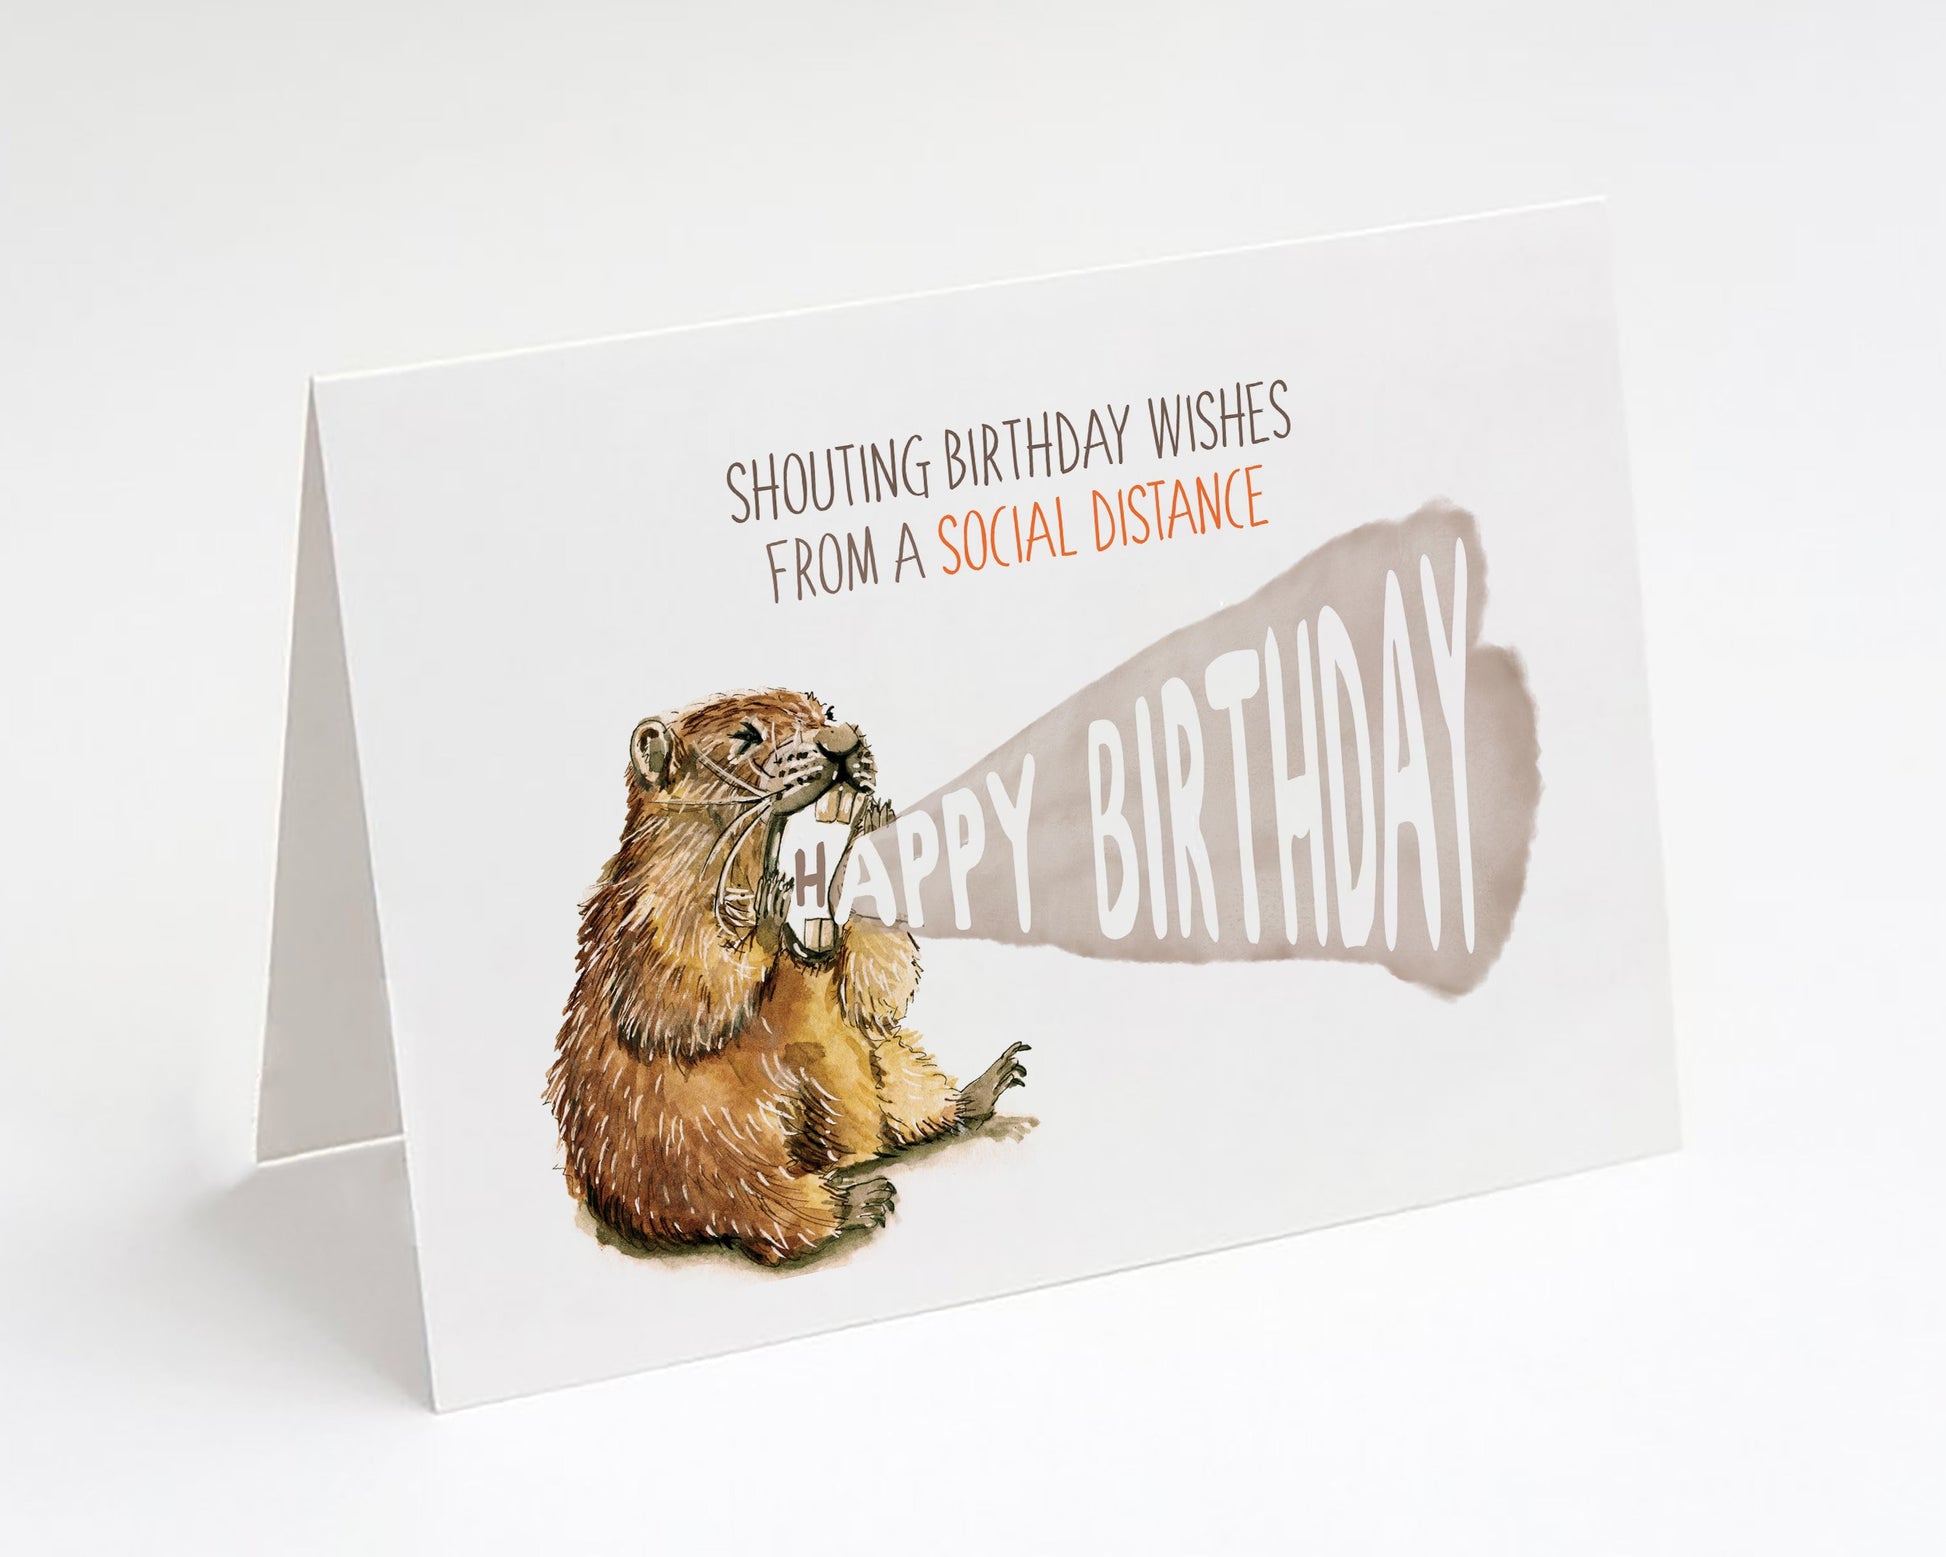 Marmot Funny Happy Birthday Card With Social Distance, Funny Birthday Card For Friend, Happy Birthday With A Social Distancing, Stay At Home